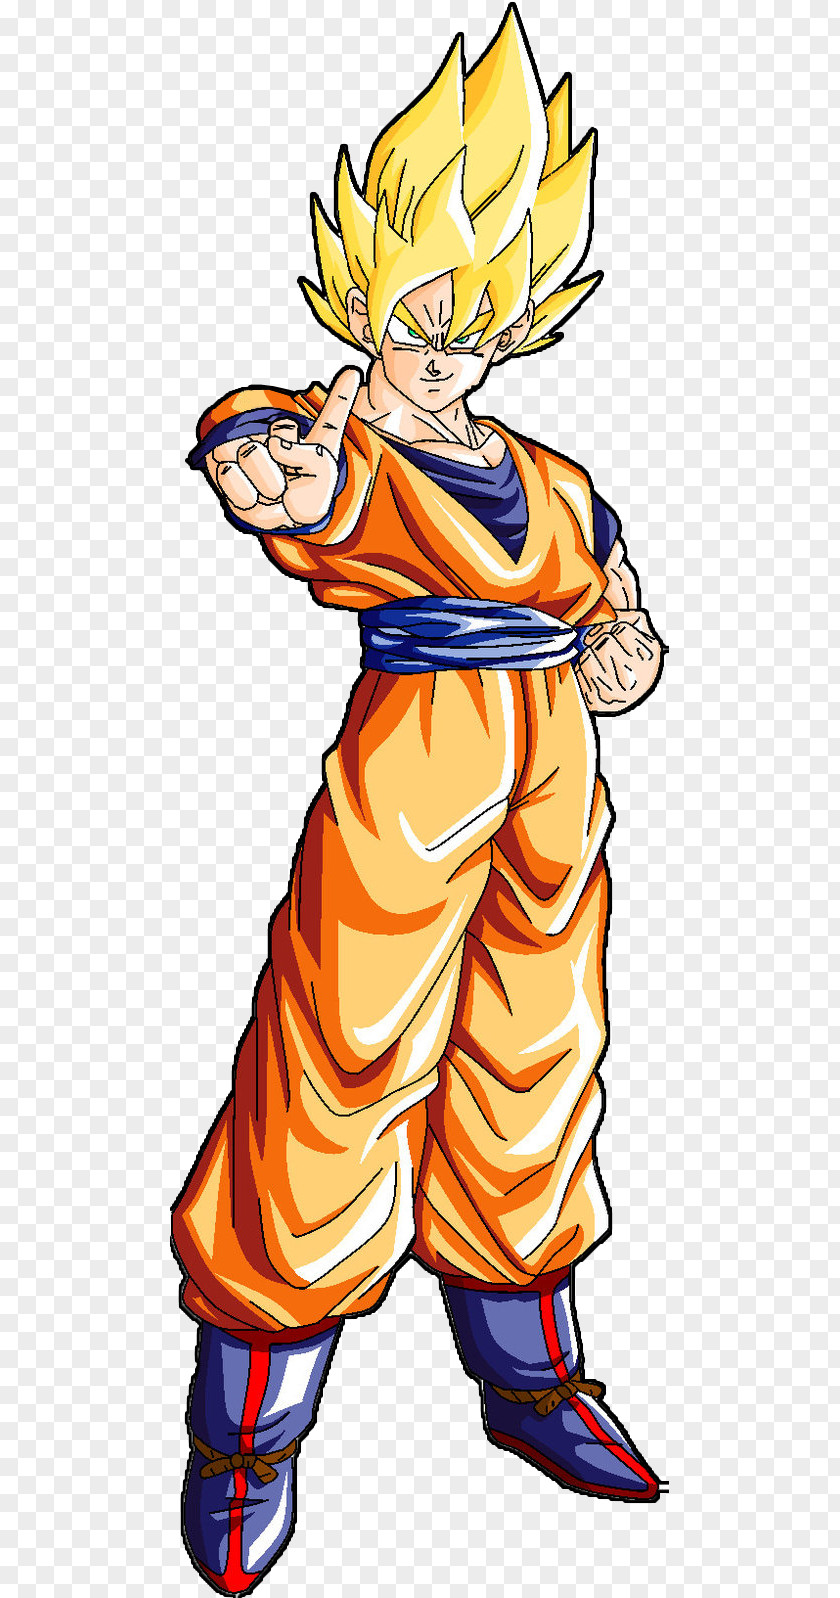 Goku Piccolo Trunks Vegeta Goten PNG